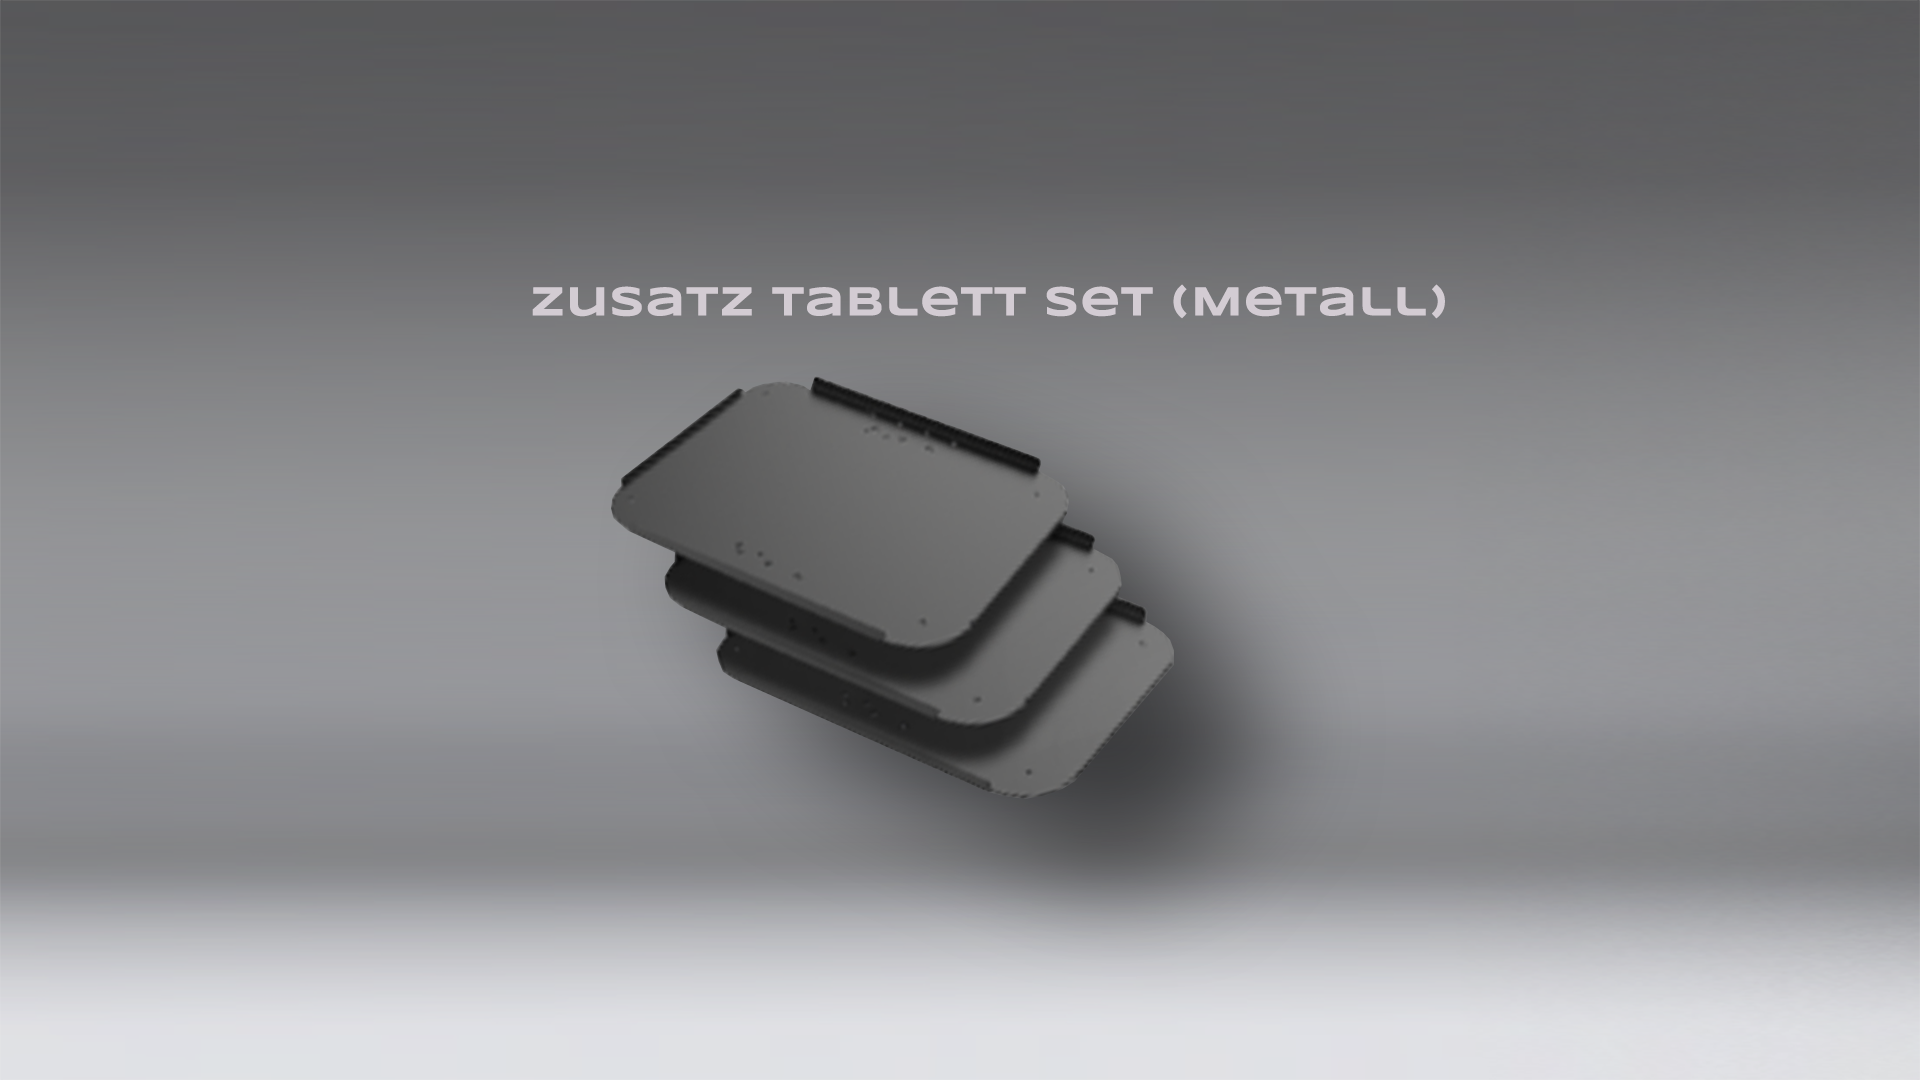 Lucki Bot - Zusatz Tablett Set